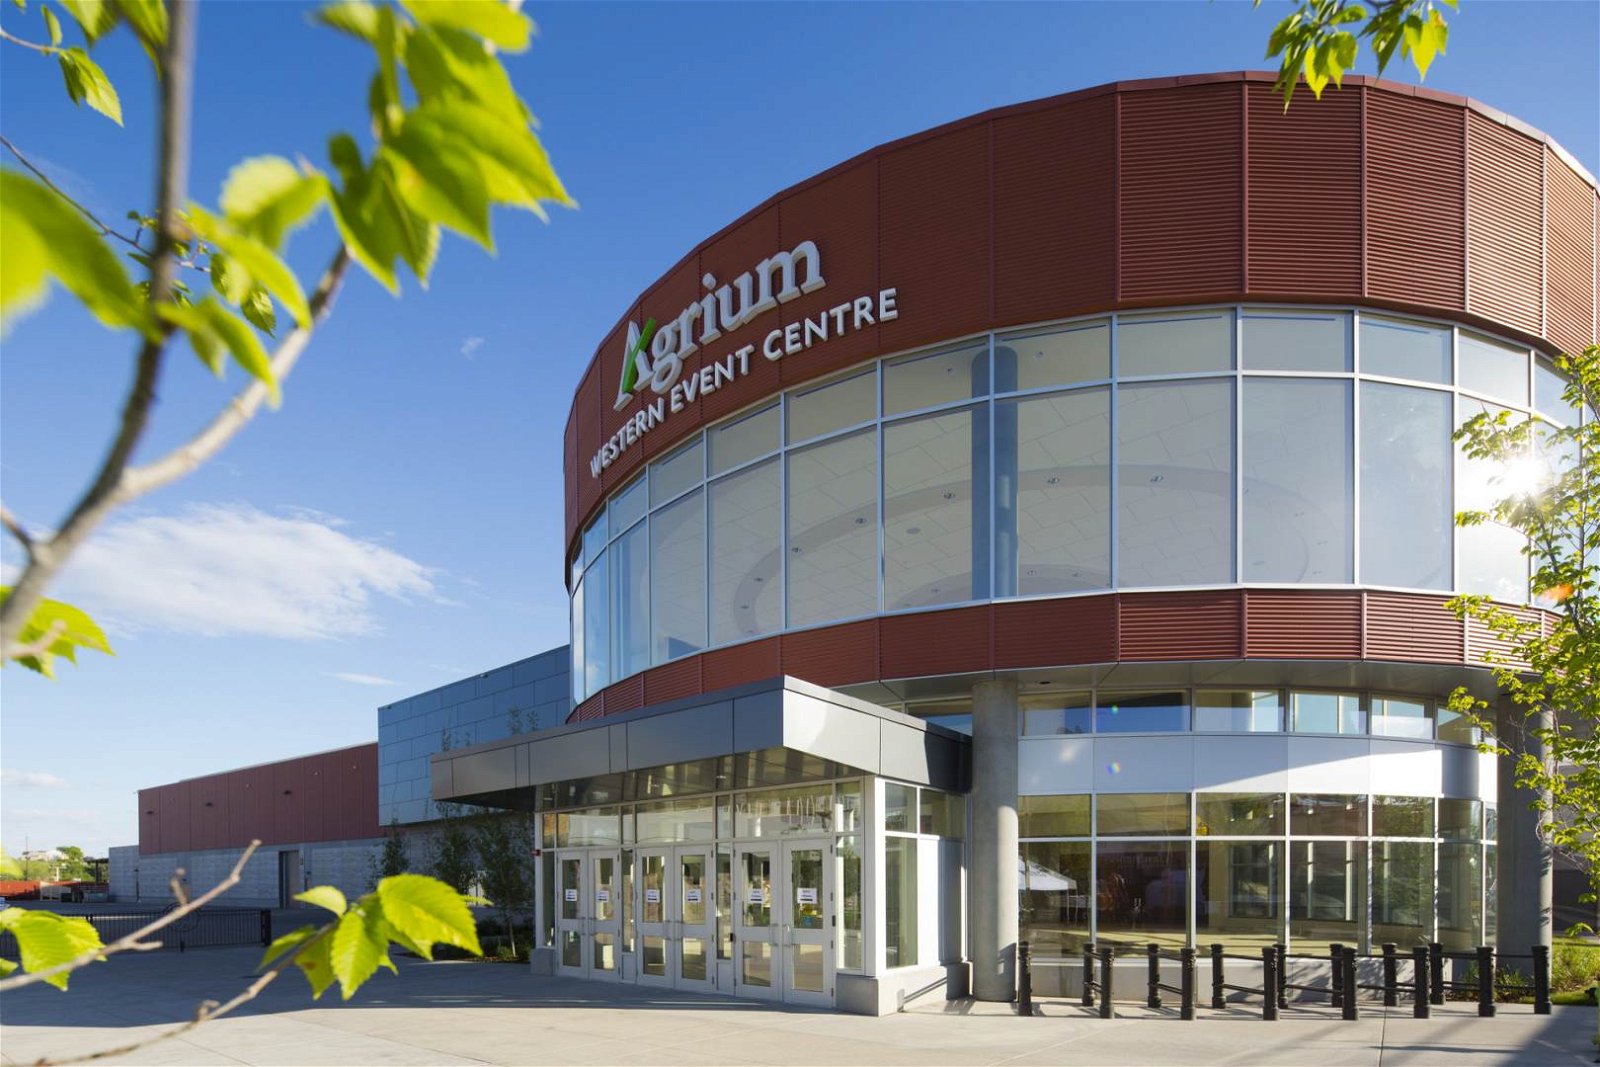 Calgary Stampede - Nutrien Western Event Centre